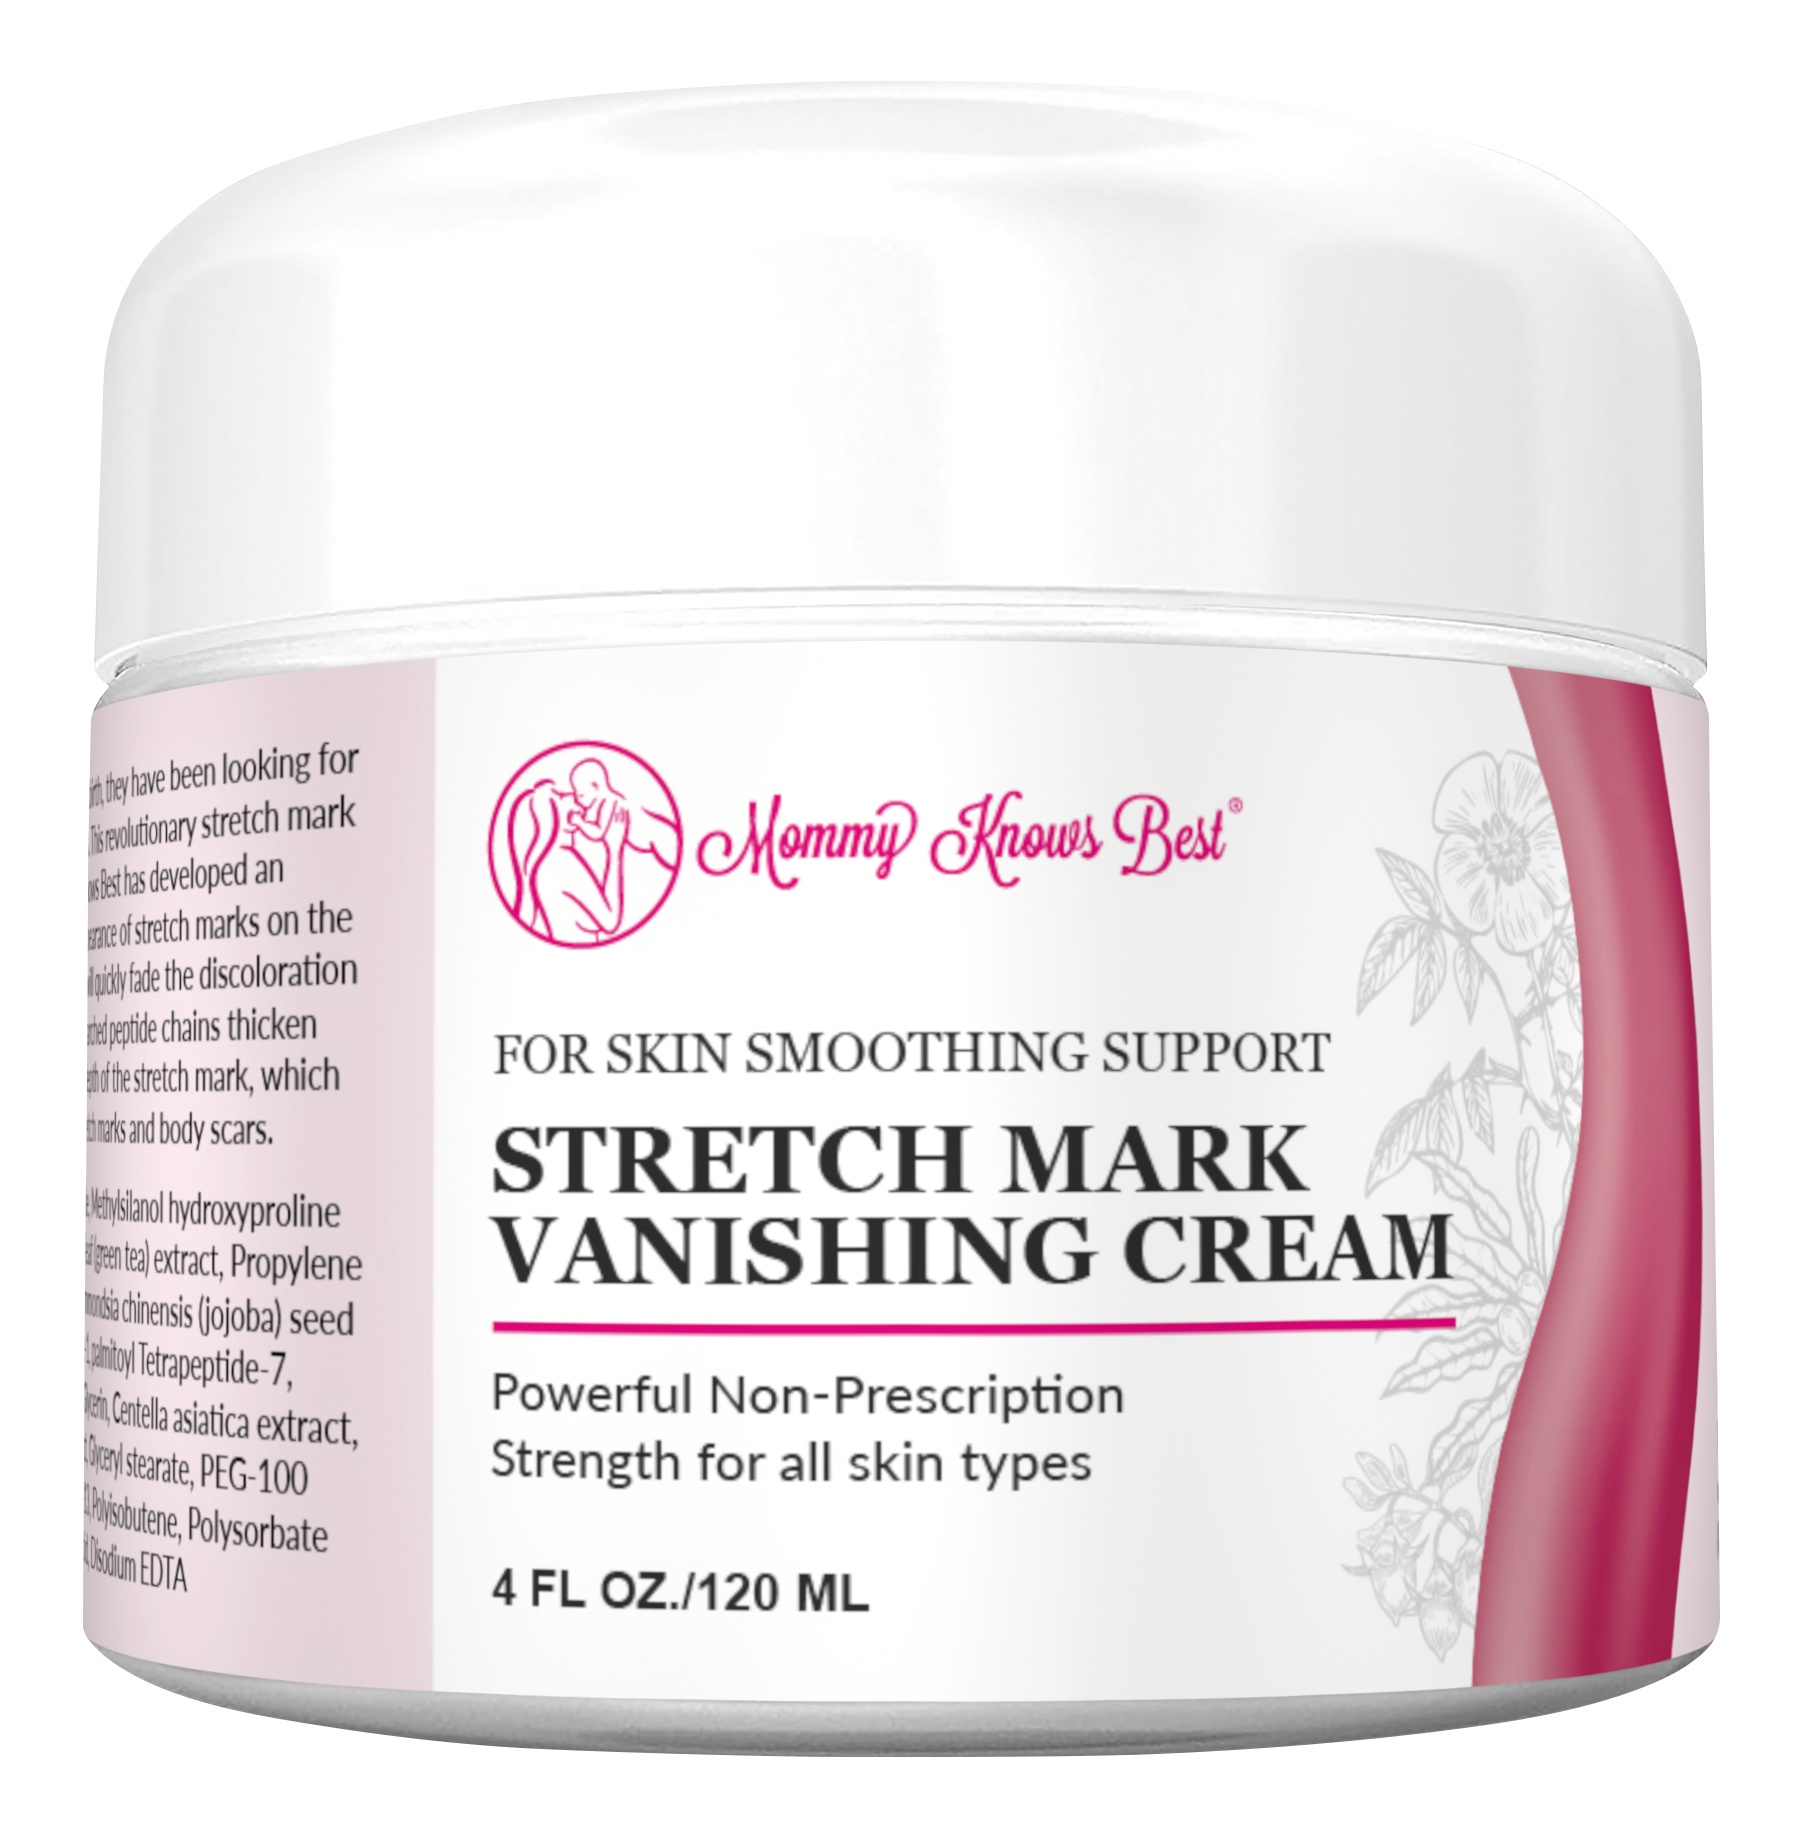 Mommy knows best Stretch Marks Vanishing Cream